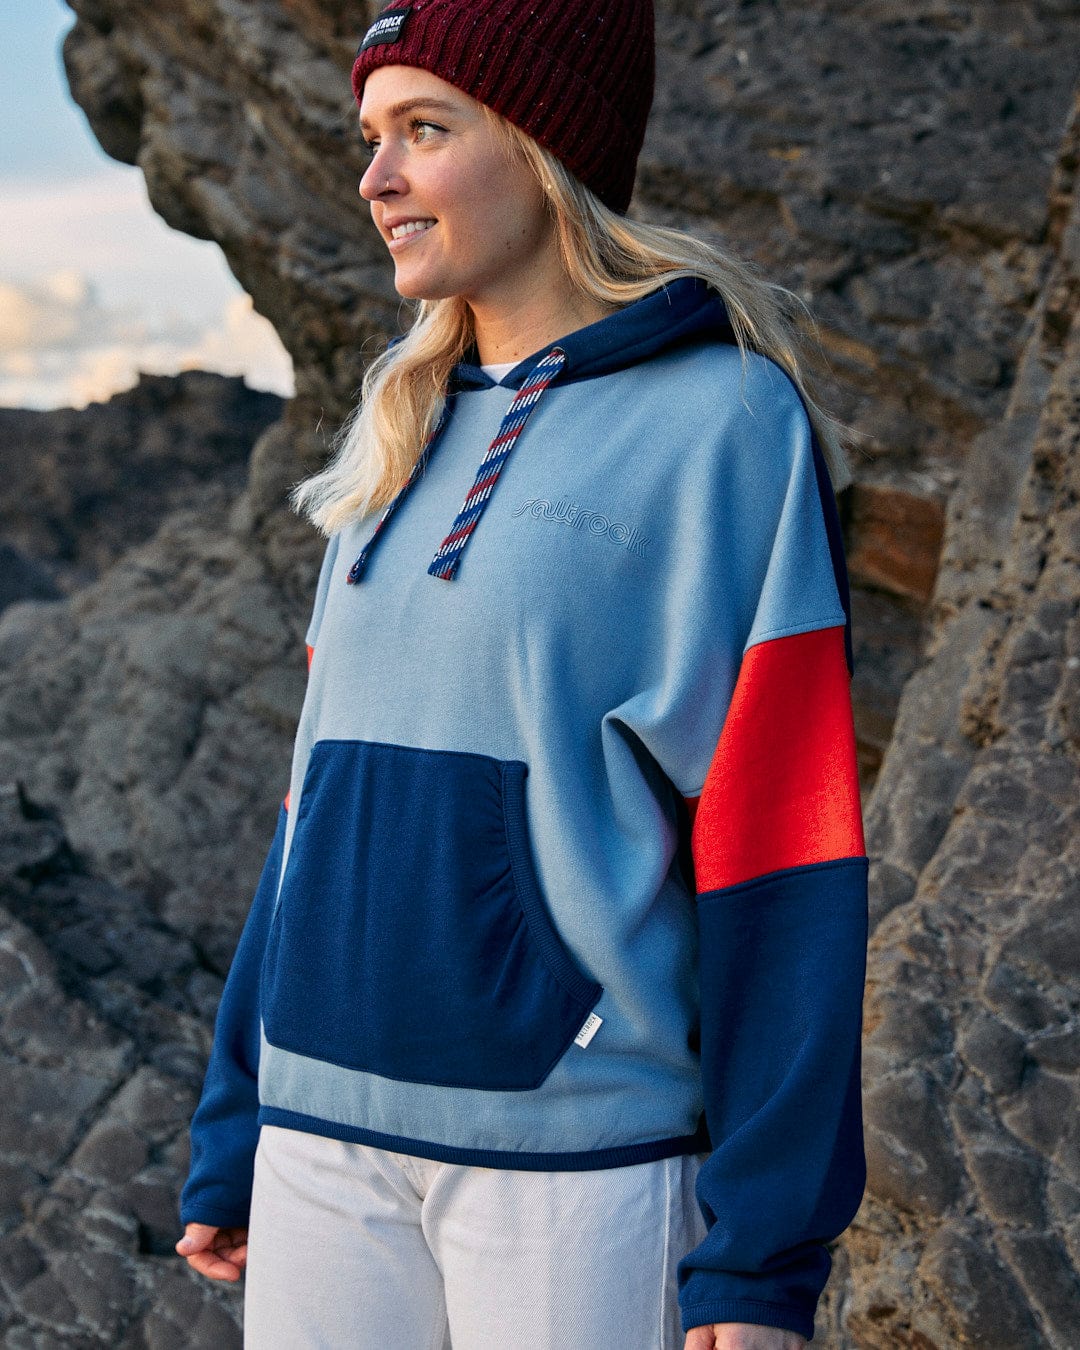 A woman wearing the Anya - Womens Pop Hoodie - Blue with Saltrock branding, standing on a rock.